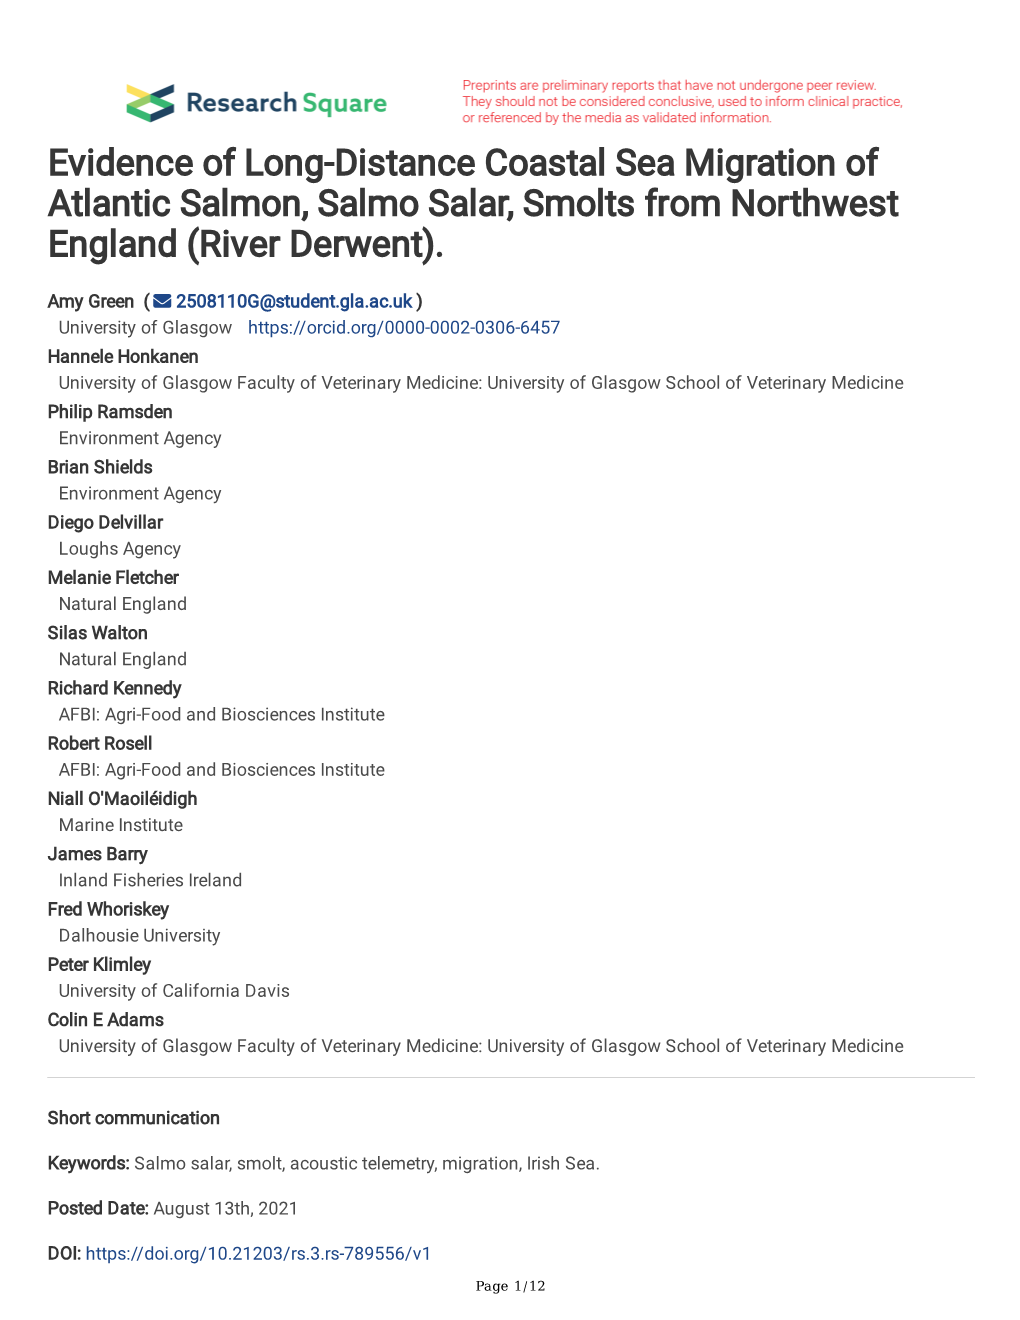 Evidence of Long-Distance Coastal Sea Migration of Atlantic Salmon, Salmo Salar, Smolts from Northwest England (River Derwent)